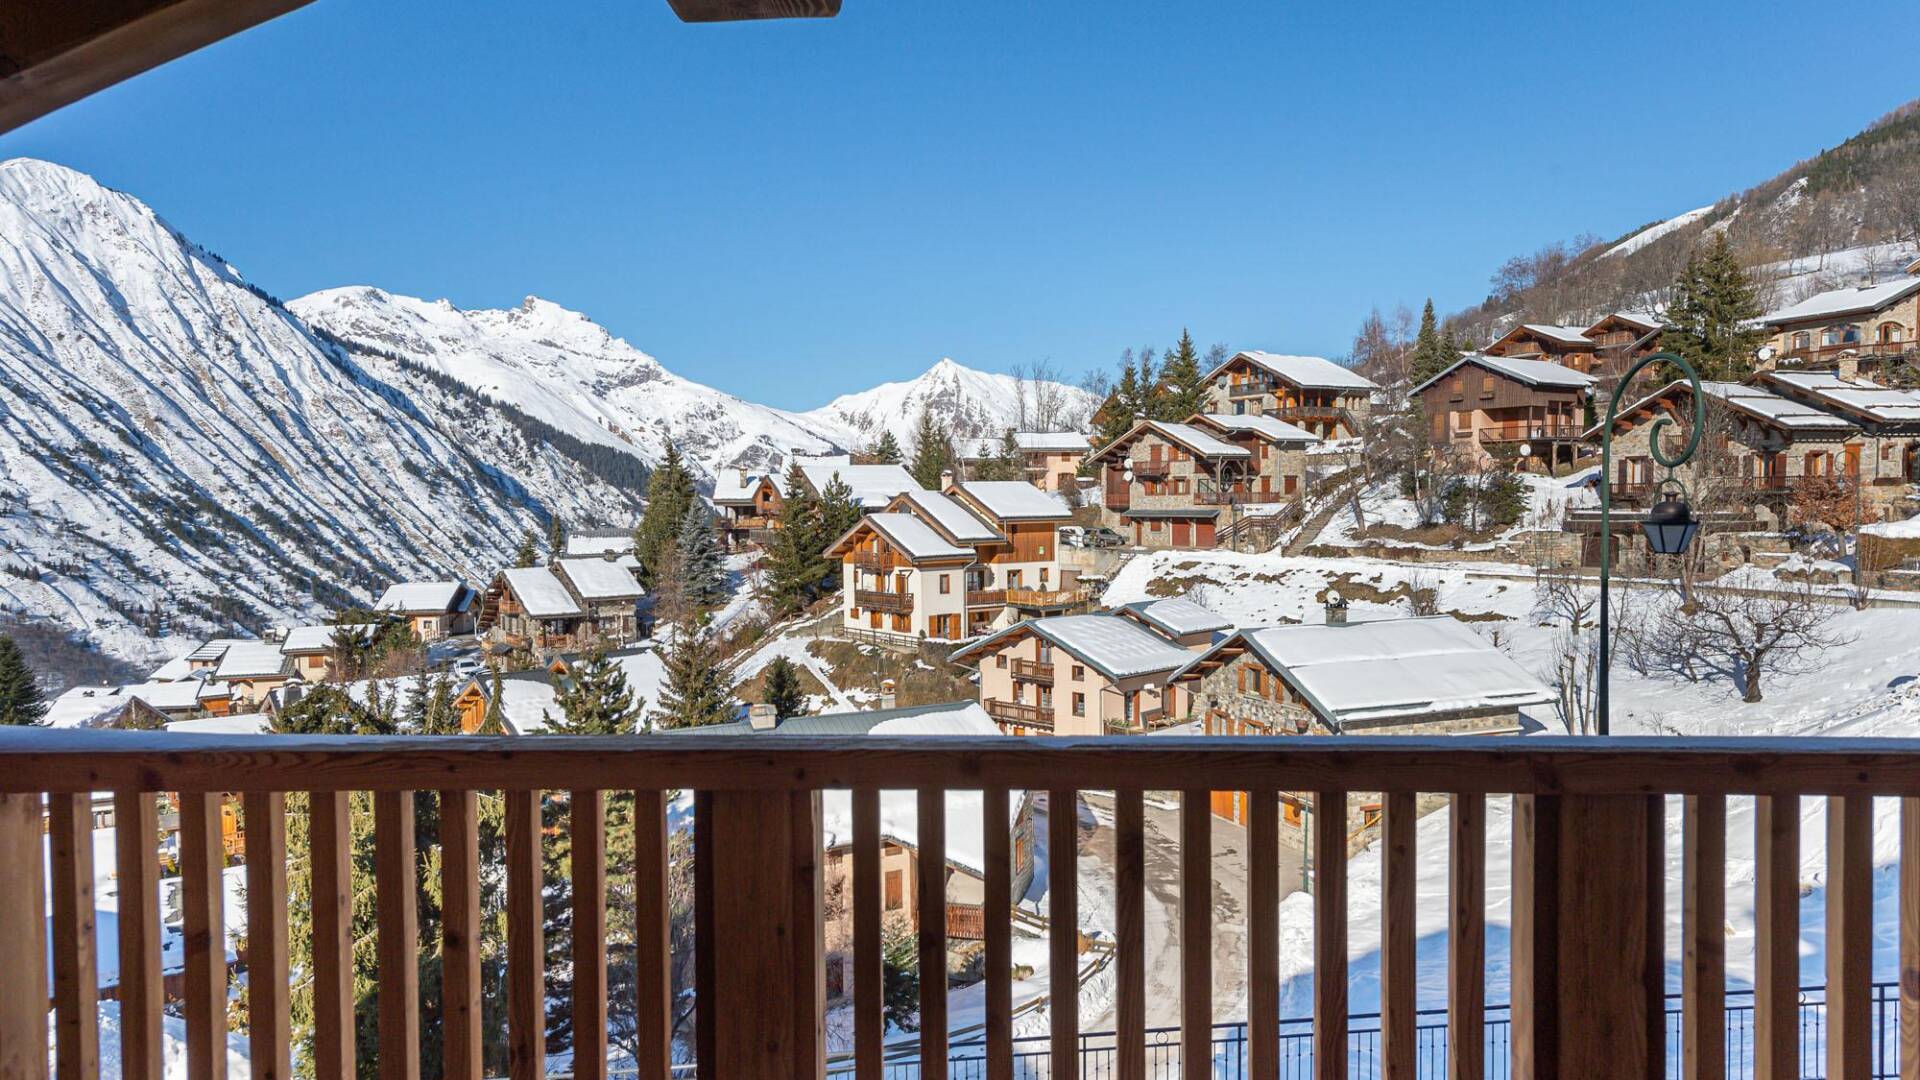 luxury Chalet Peuplier for rent in Saint-Martin-de-Belleville near 3 Valleys ski area, French Alps